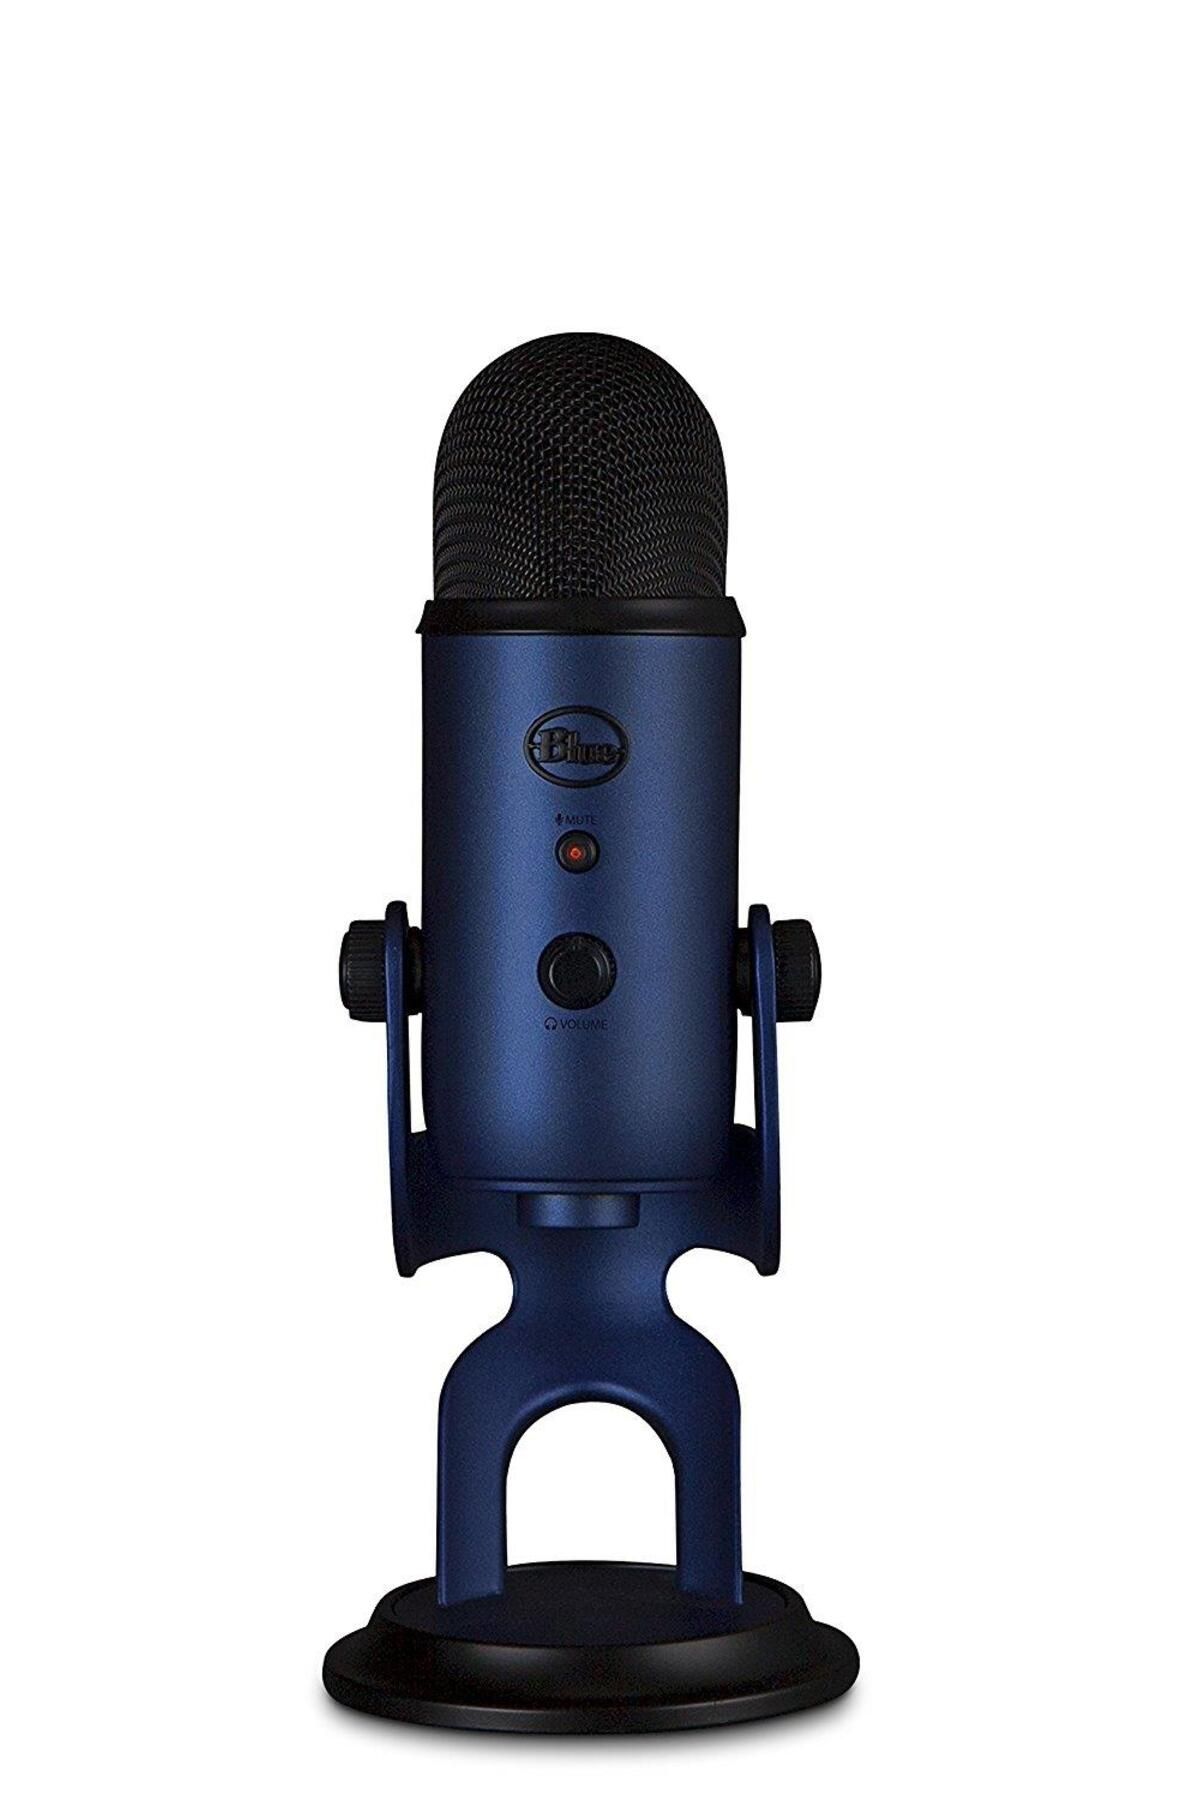 Blue Yeti Usb Microphone Lacivert